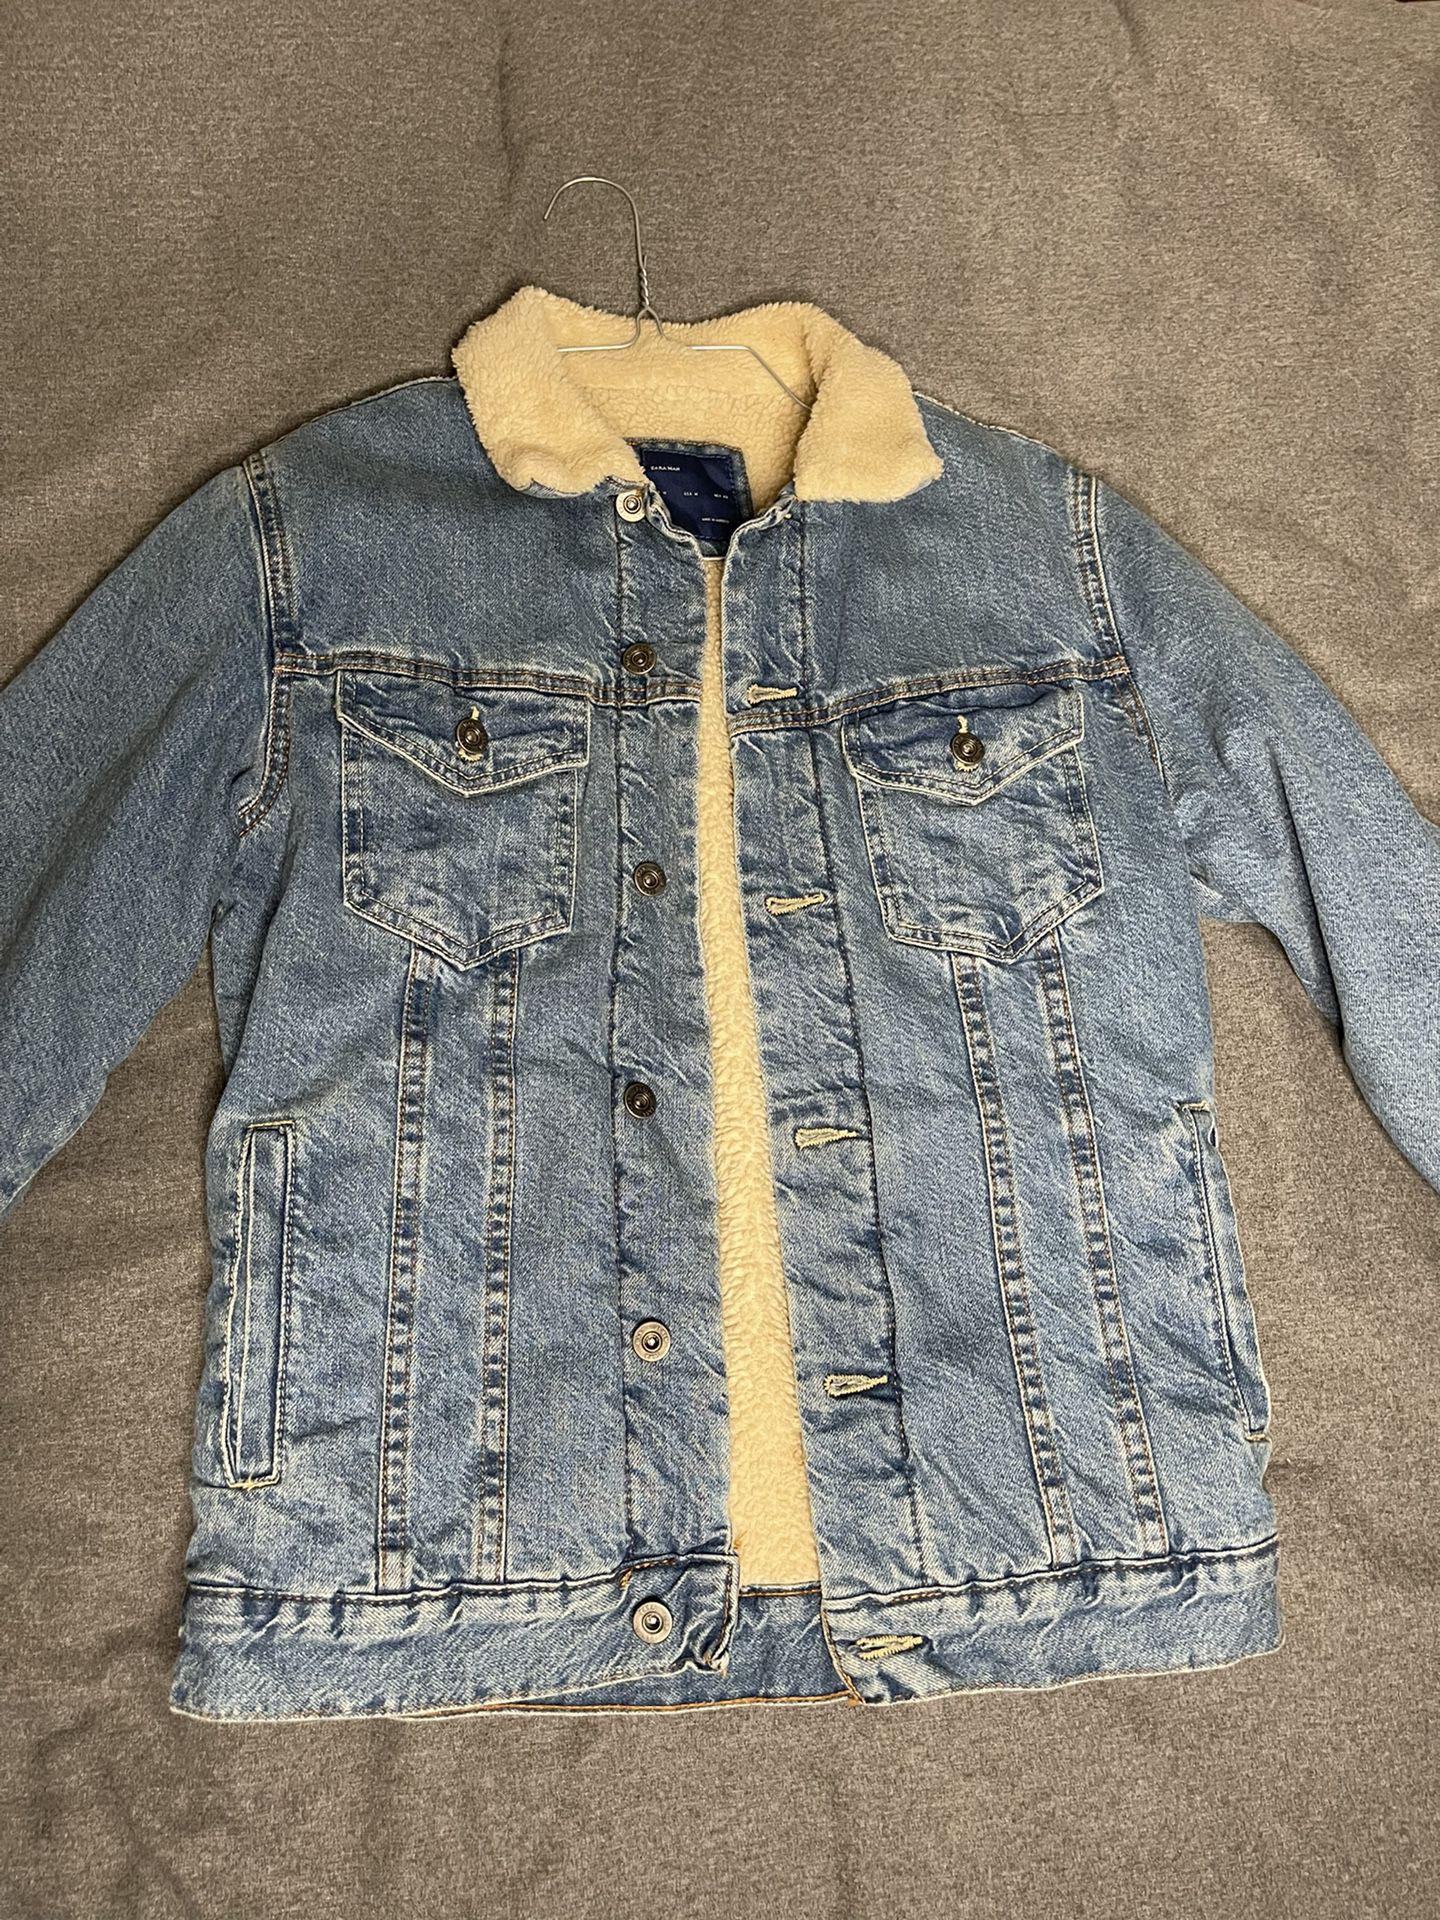 Zara Wool Denim Jacket (Size Medium)